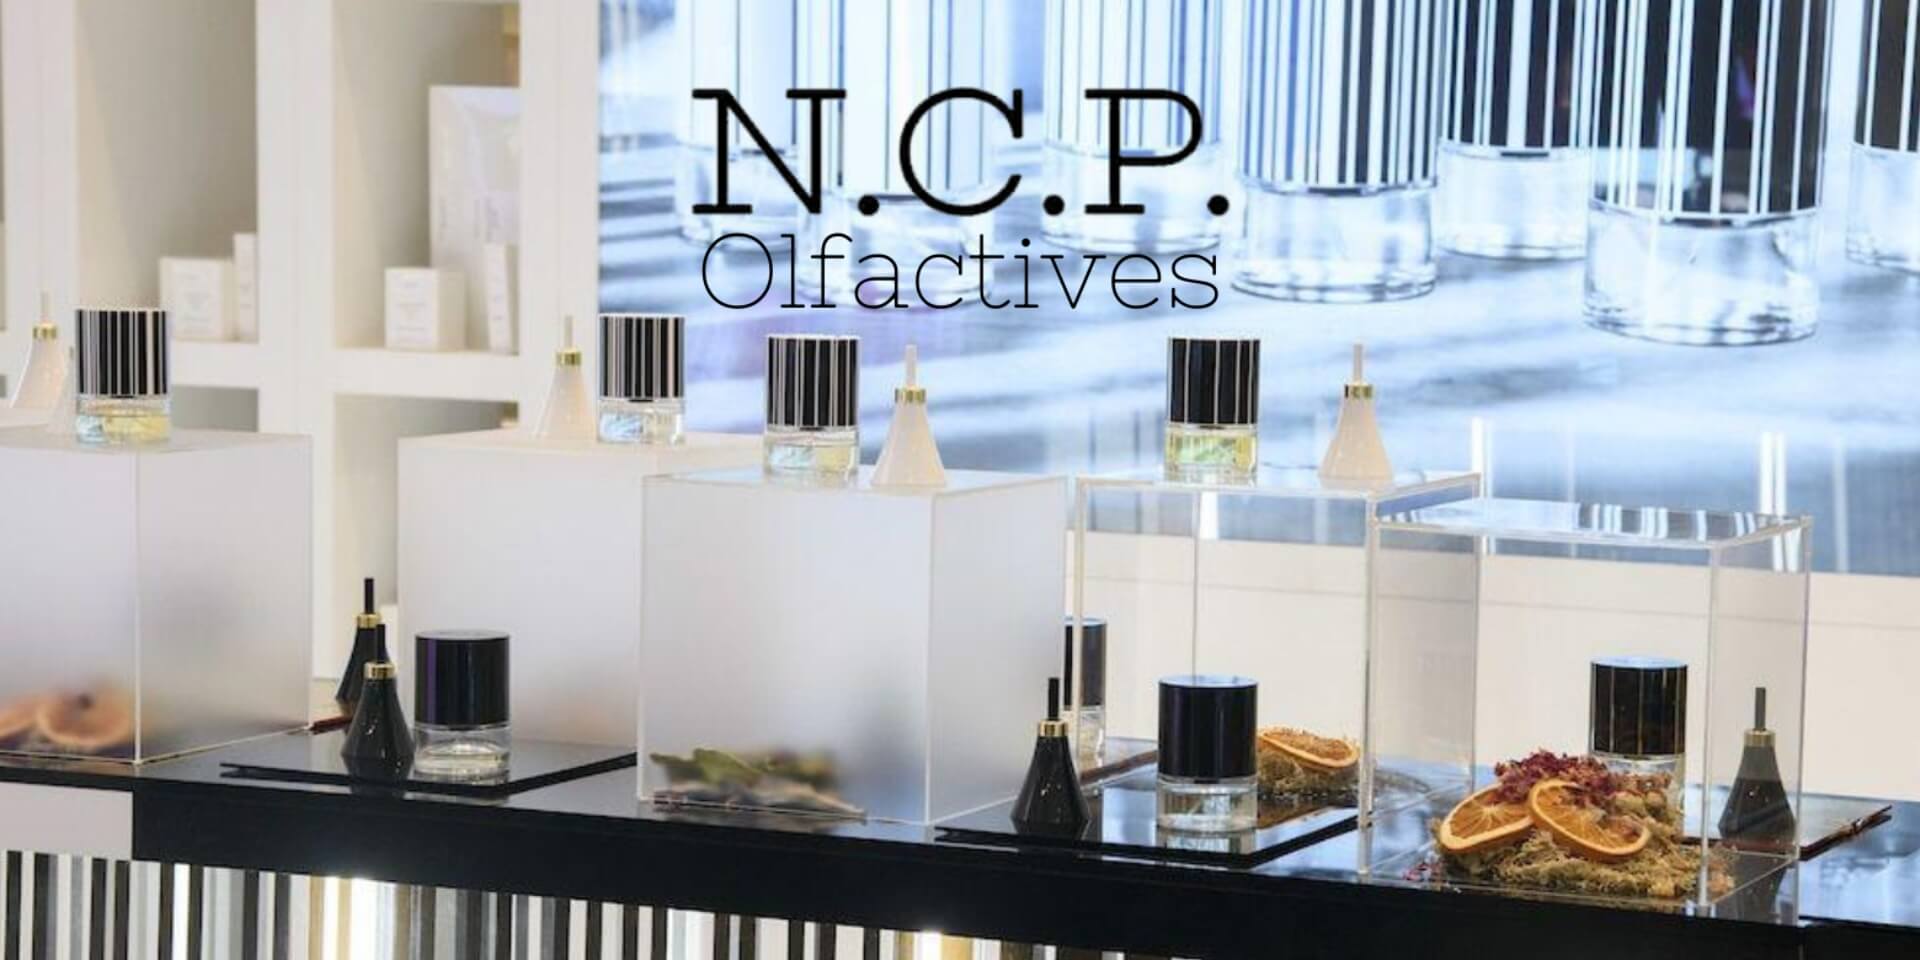 N.C.P. OLFACTIVES